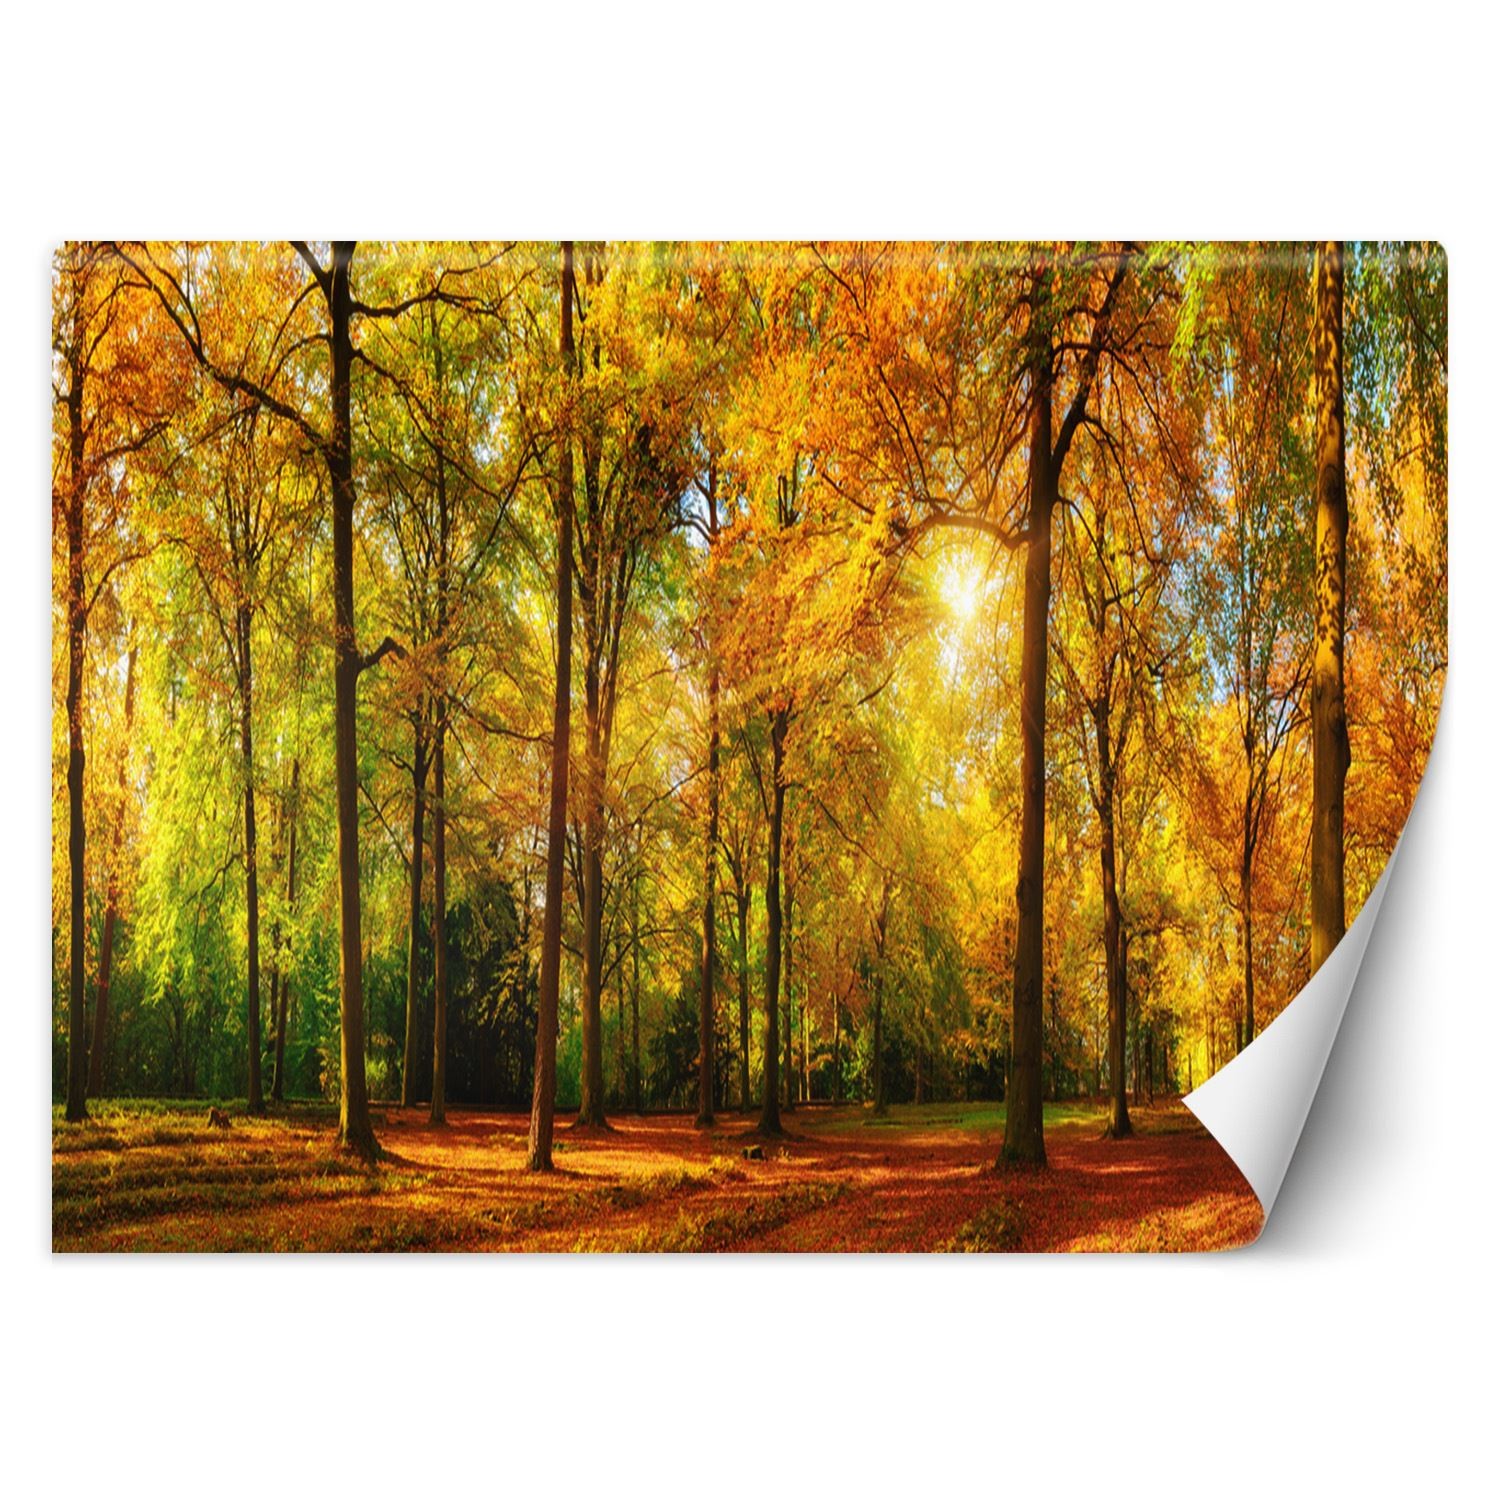 Trend24 – Behang – Herfstbos – Vliesbehang – Fotobehang Natuur – Behang Woonkamer – 450x315x2 cm – Incl. behanglijm